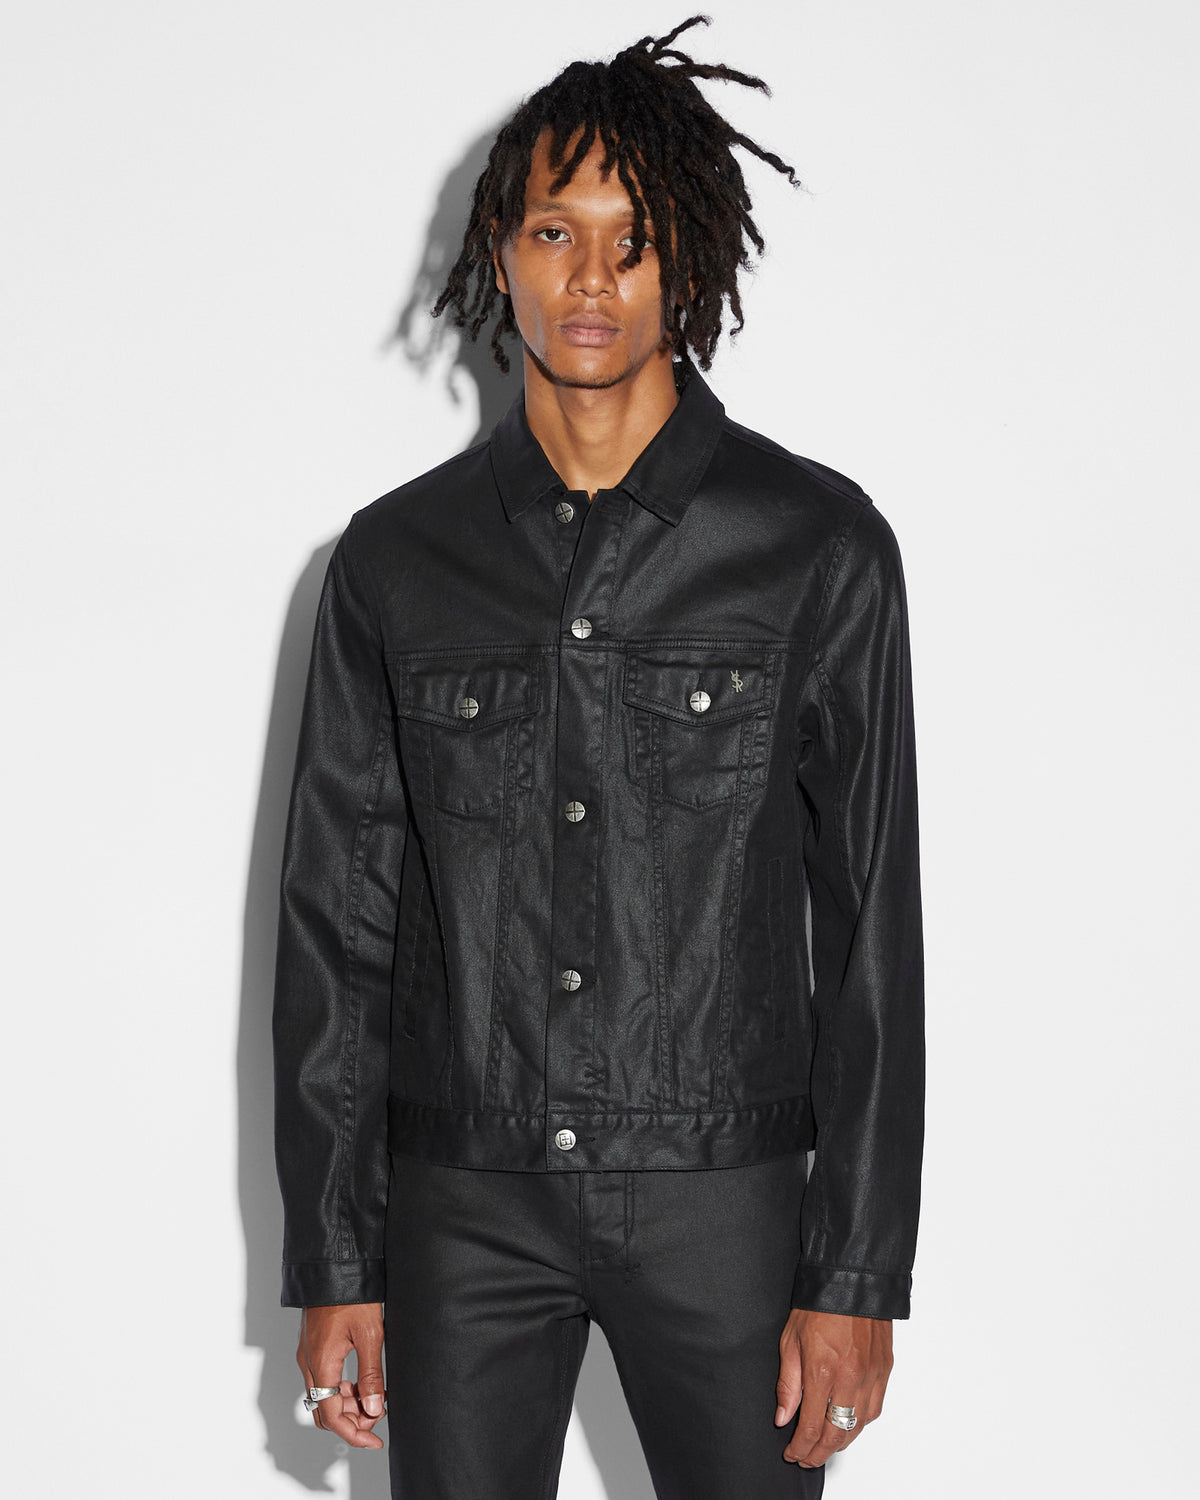 Ksubi - Kendall Jenner denim jacket on Designer Wardrobe